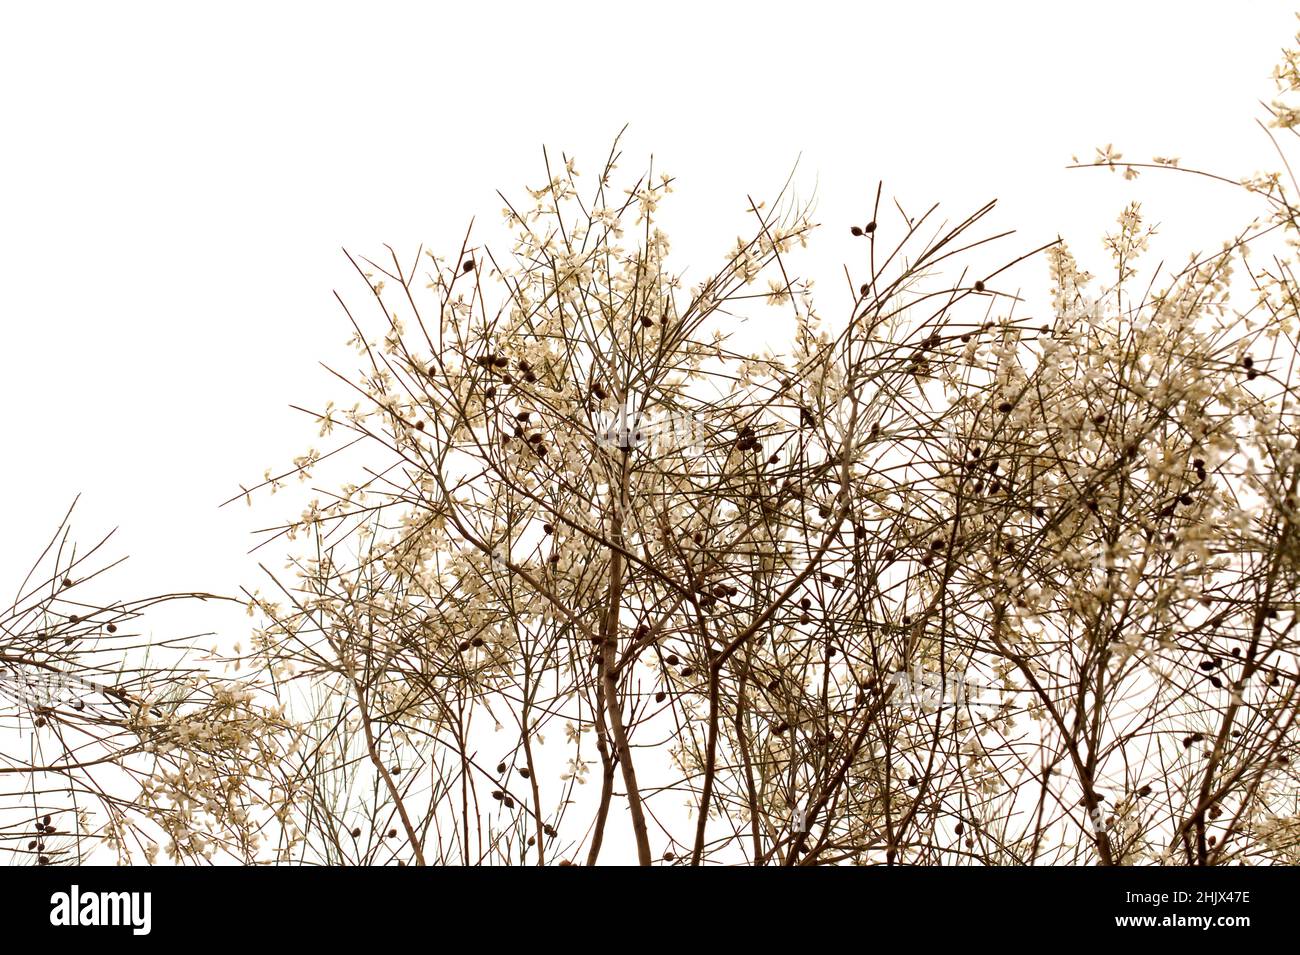 flora of Gran Canaria - Retama rhodorhizoides, broom species endemic to Canary Islands Stock Photo